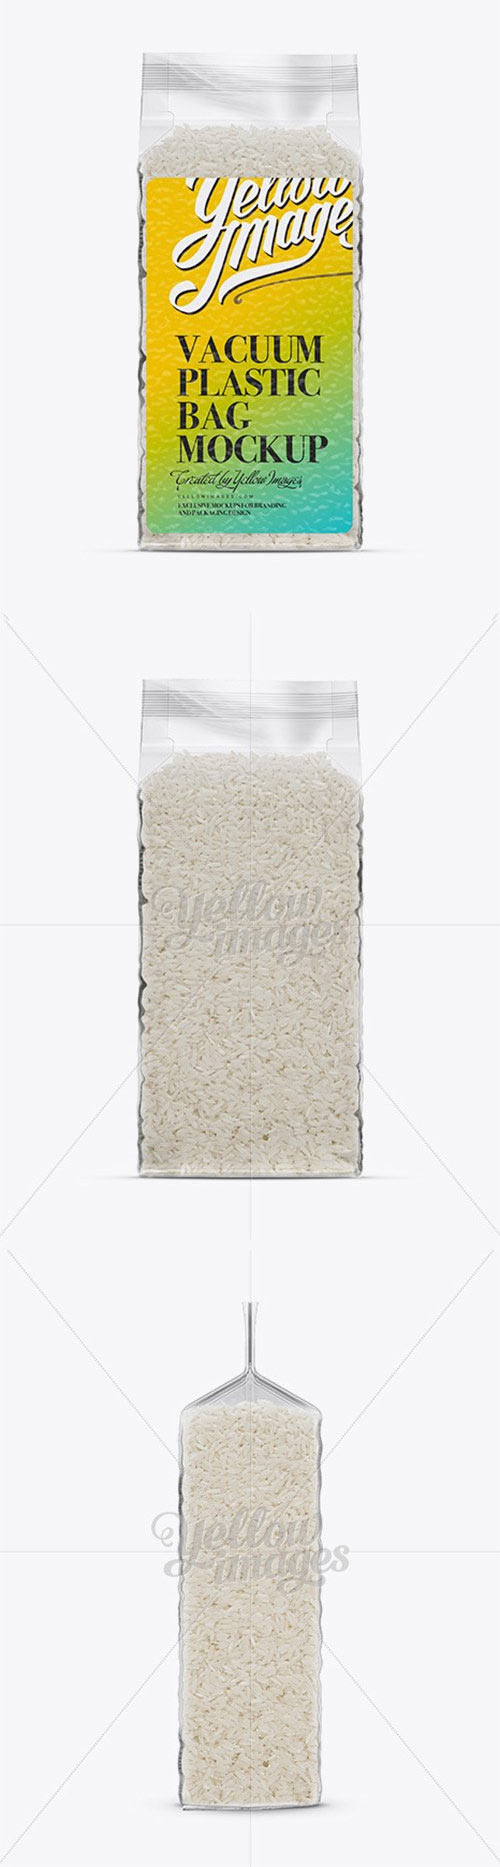 Rice Vacuum Plastic Bag Mockup